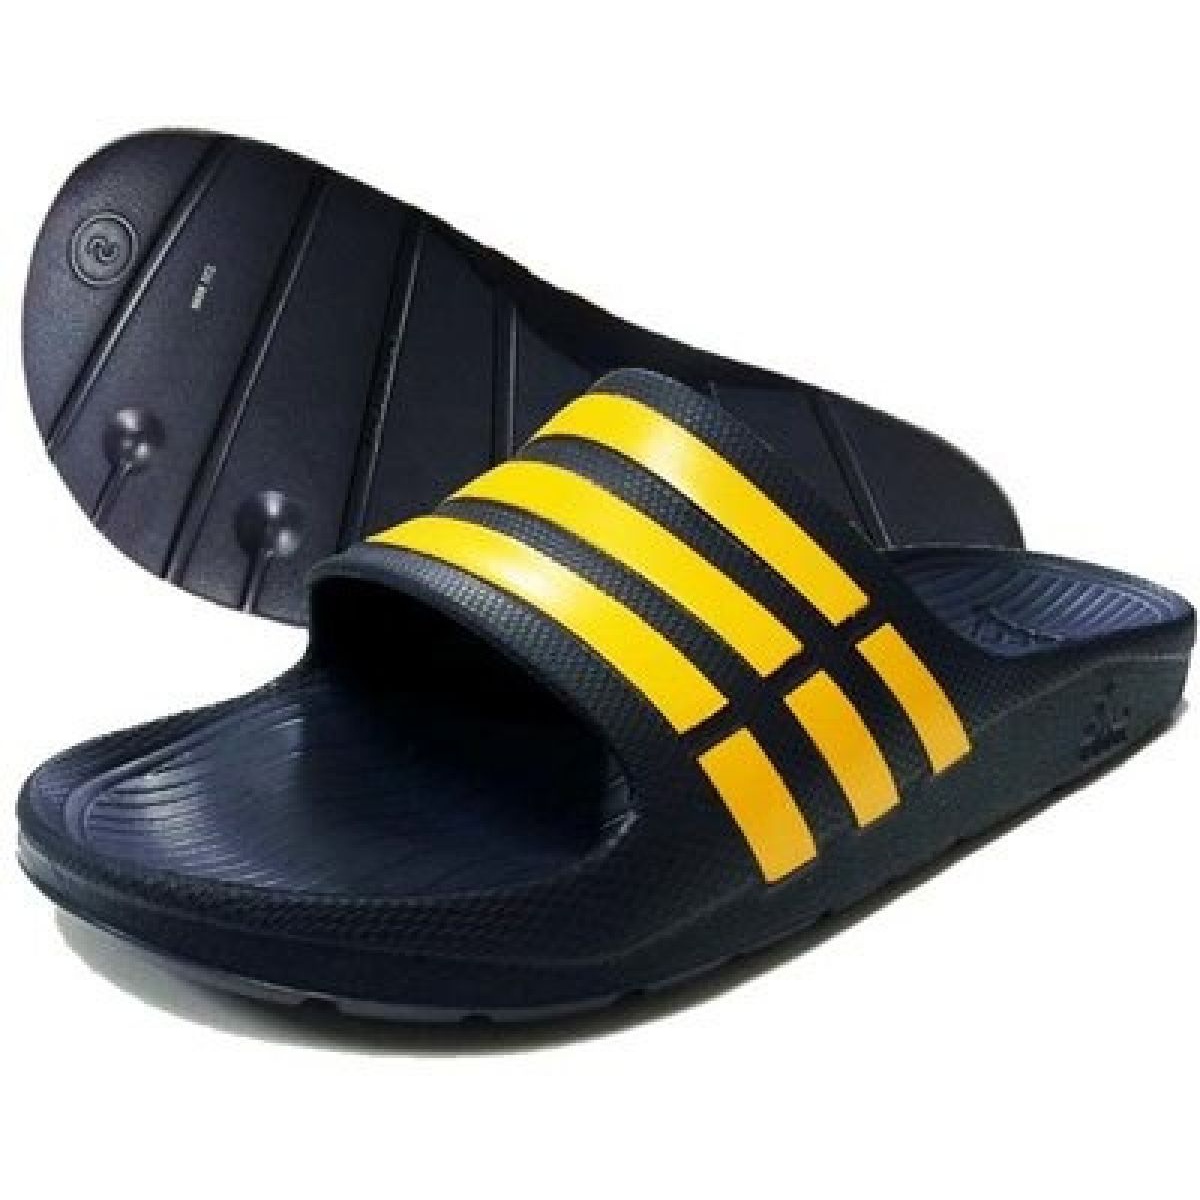 Duramo Slide M navy blue yellow - KeeShoes